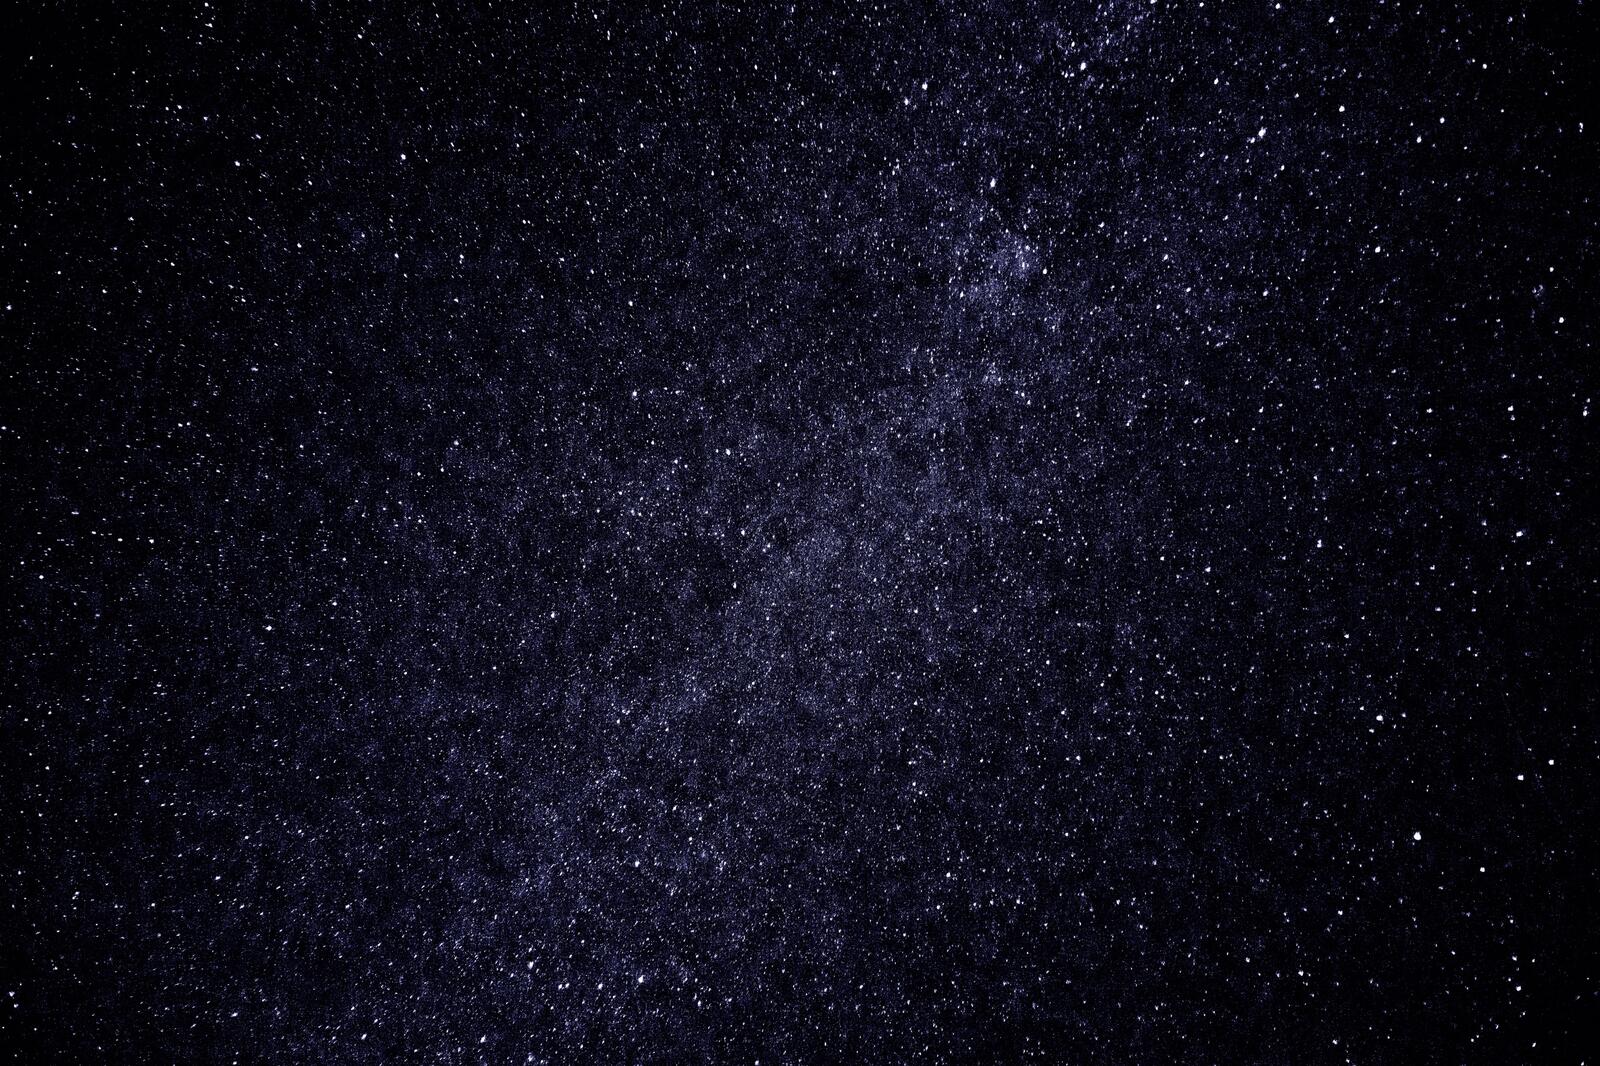 Бесплатное фото Безоблачное ночное небо со звездами